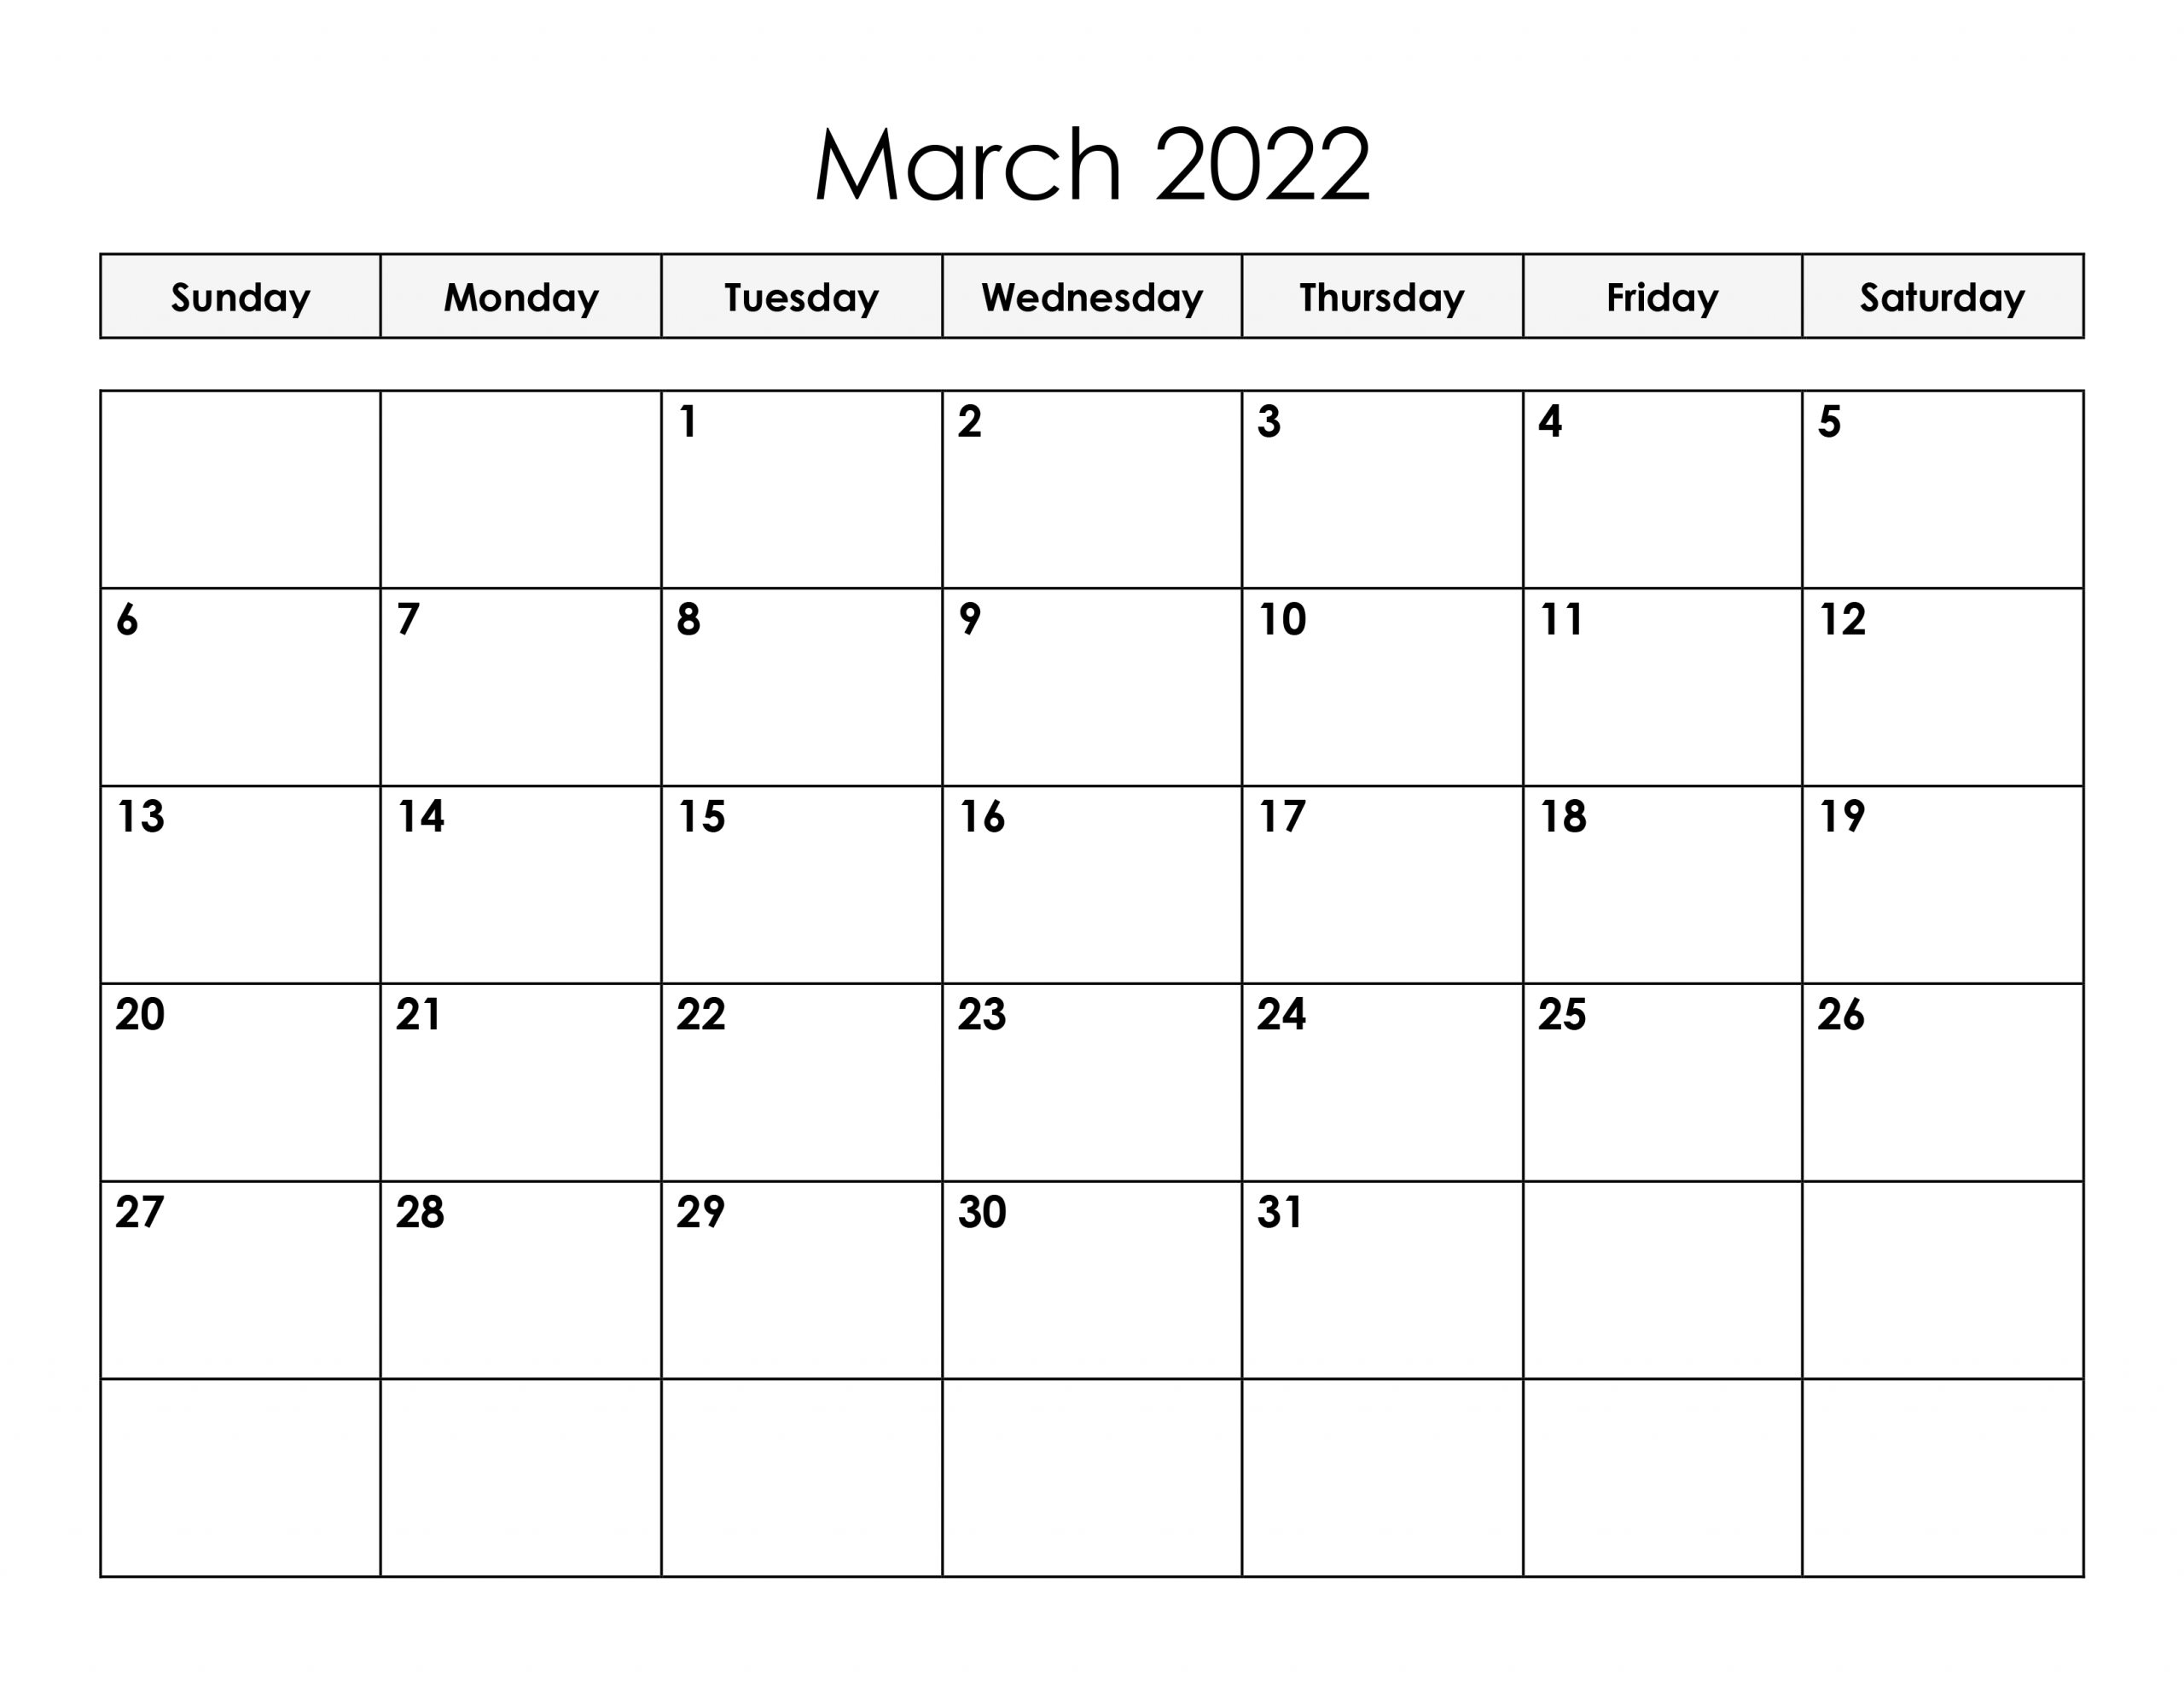 Calendar For March 2022 - Free-Calendarsu